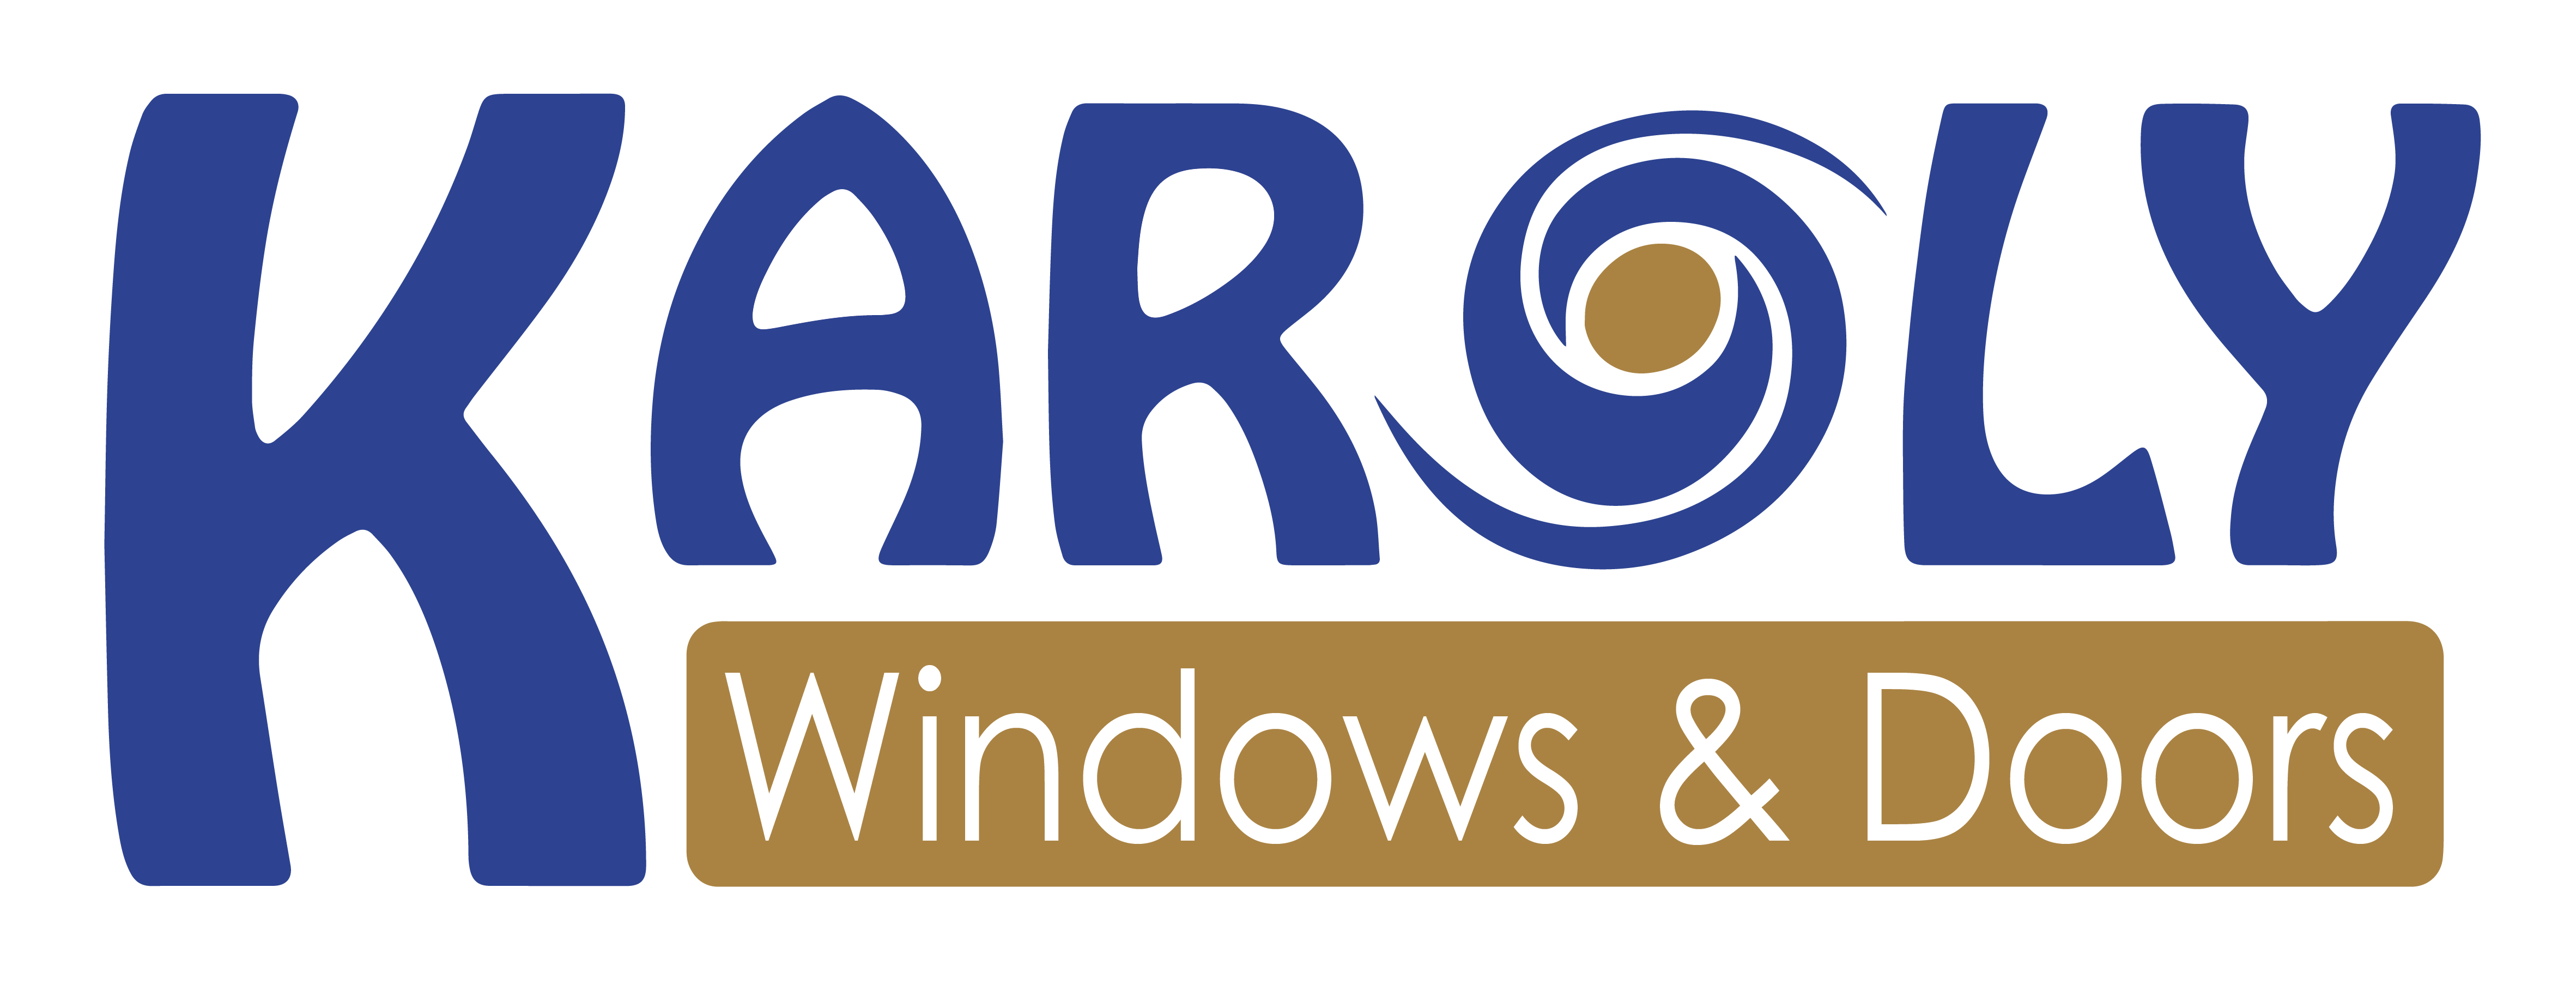 Karoly Windows & Doors Logo